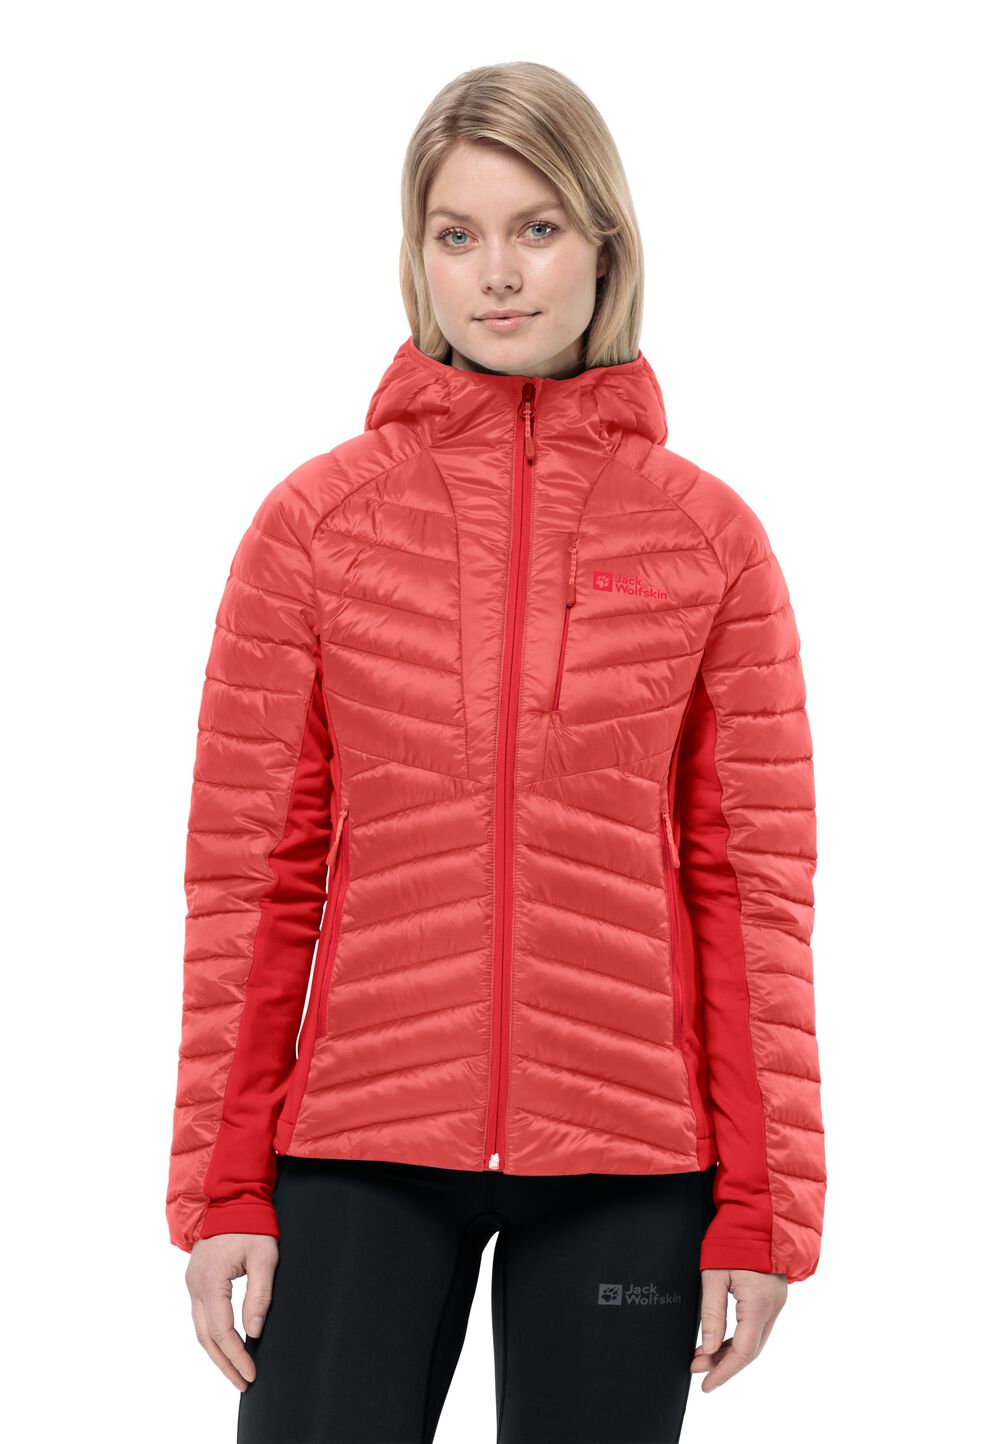 Jack Wolfskin Routeburn Pro Ins Jacket Women Isolerend jack Dames XL rood vibrant red